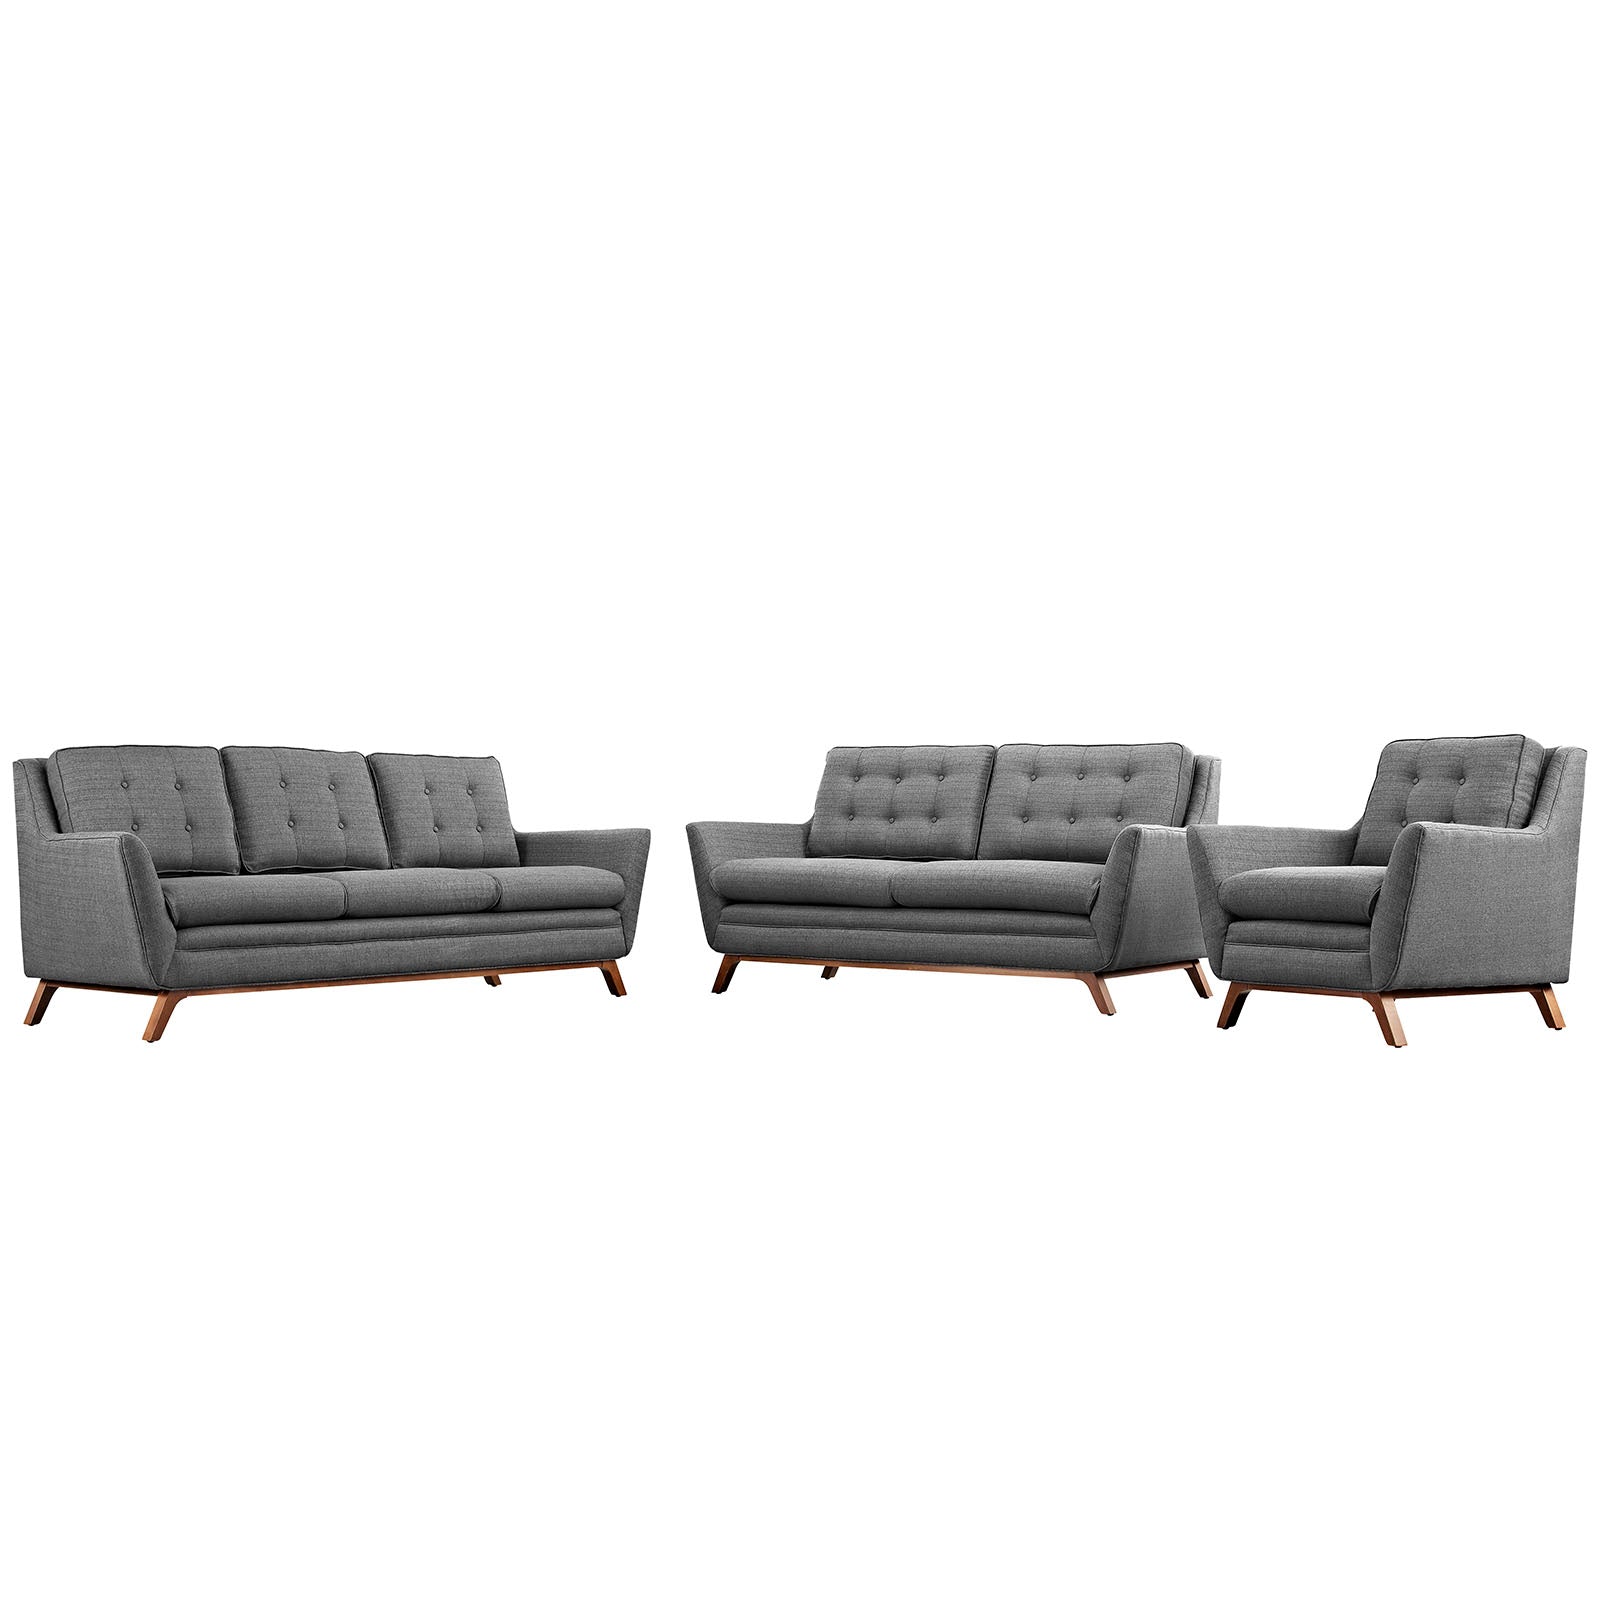 Modway Living Room Sets - Beguile Living Room Set Fabric Set Of 3 Gray